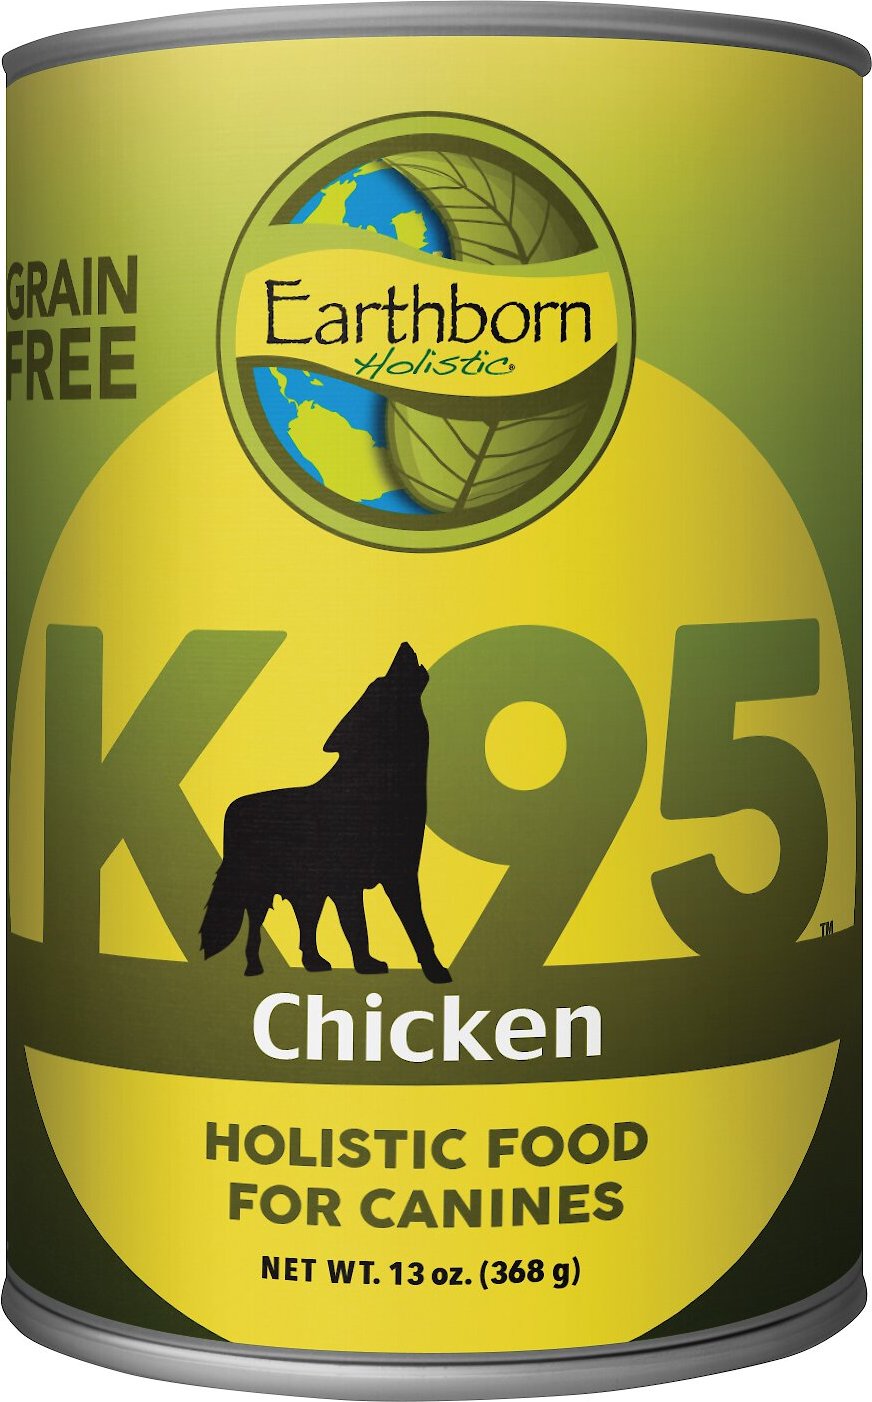 EARTHBORN HOLISTIC K95 Chicken Recipe 